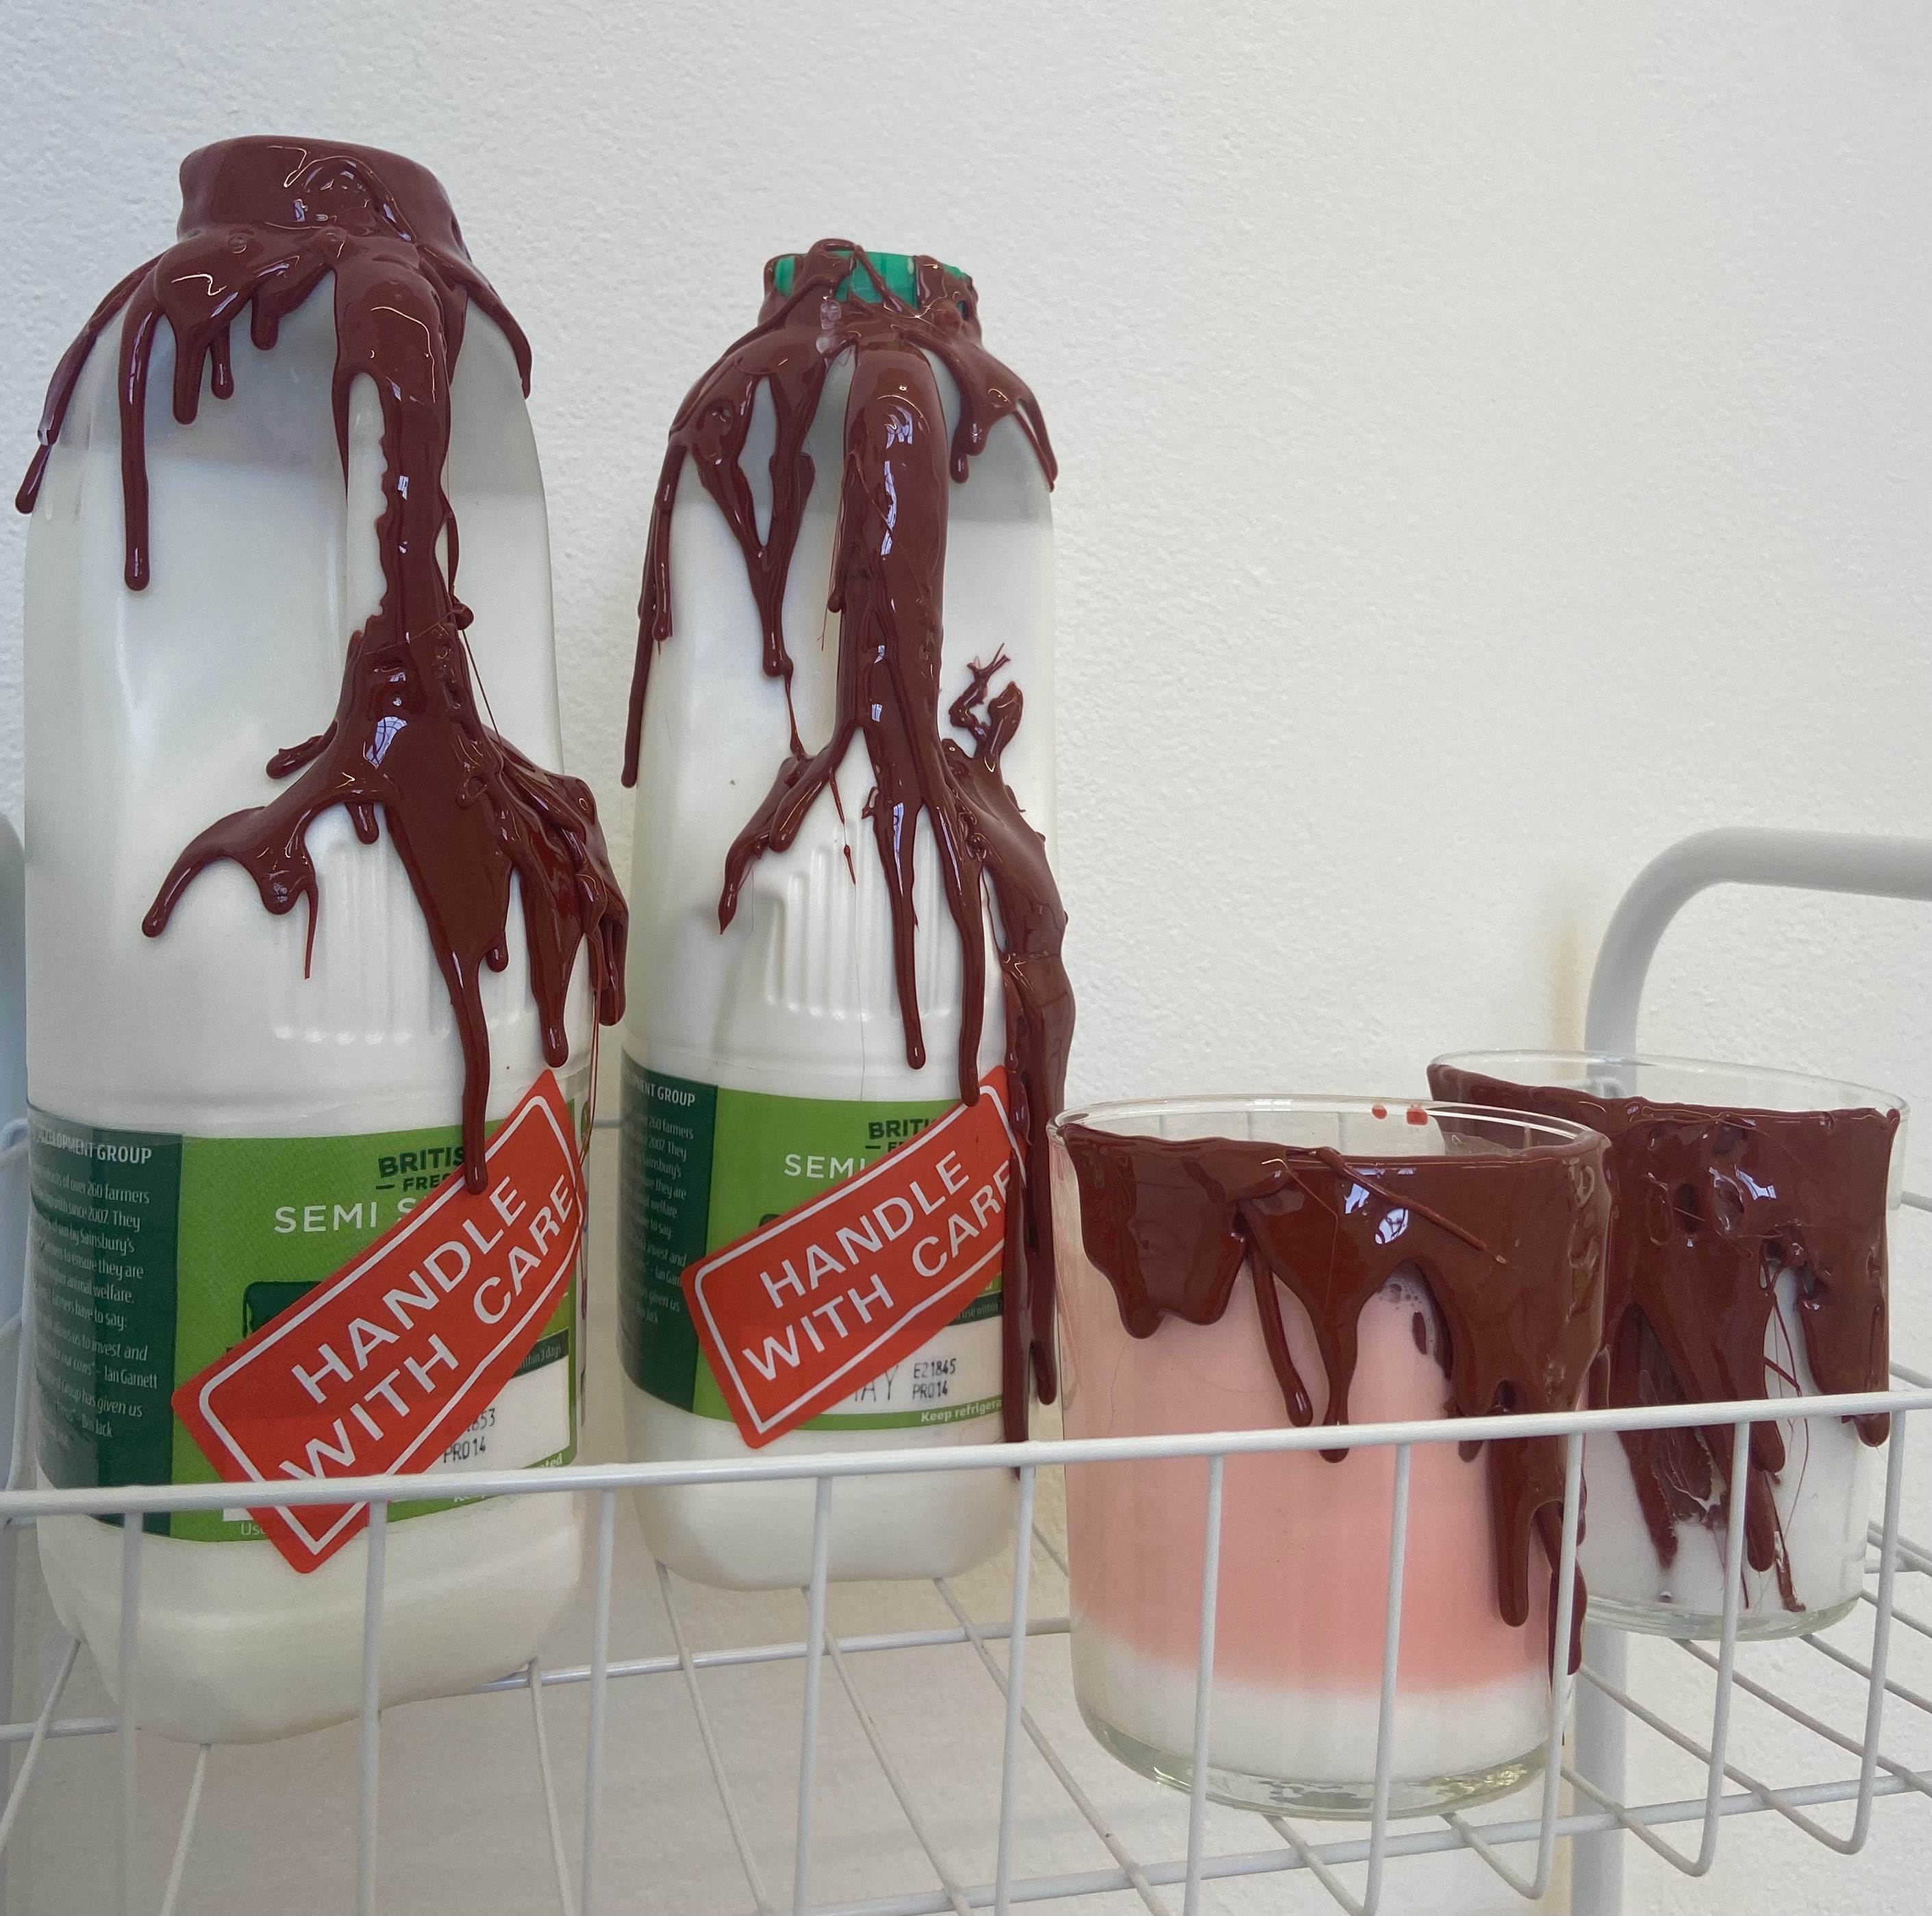 BA Fine Art work by Sofia Kassaris showing a sculpture of blood and milk.